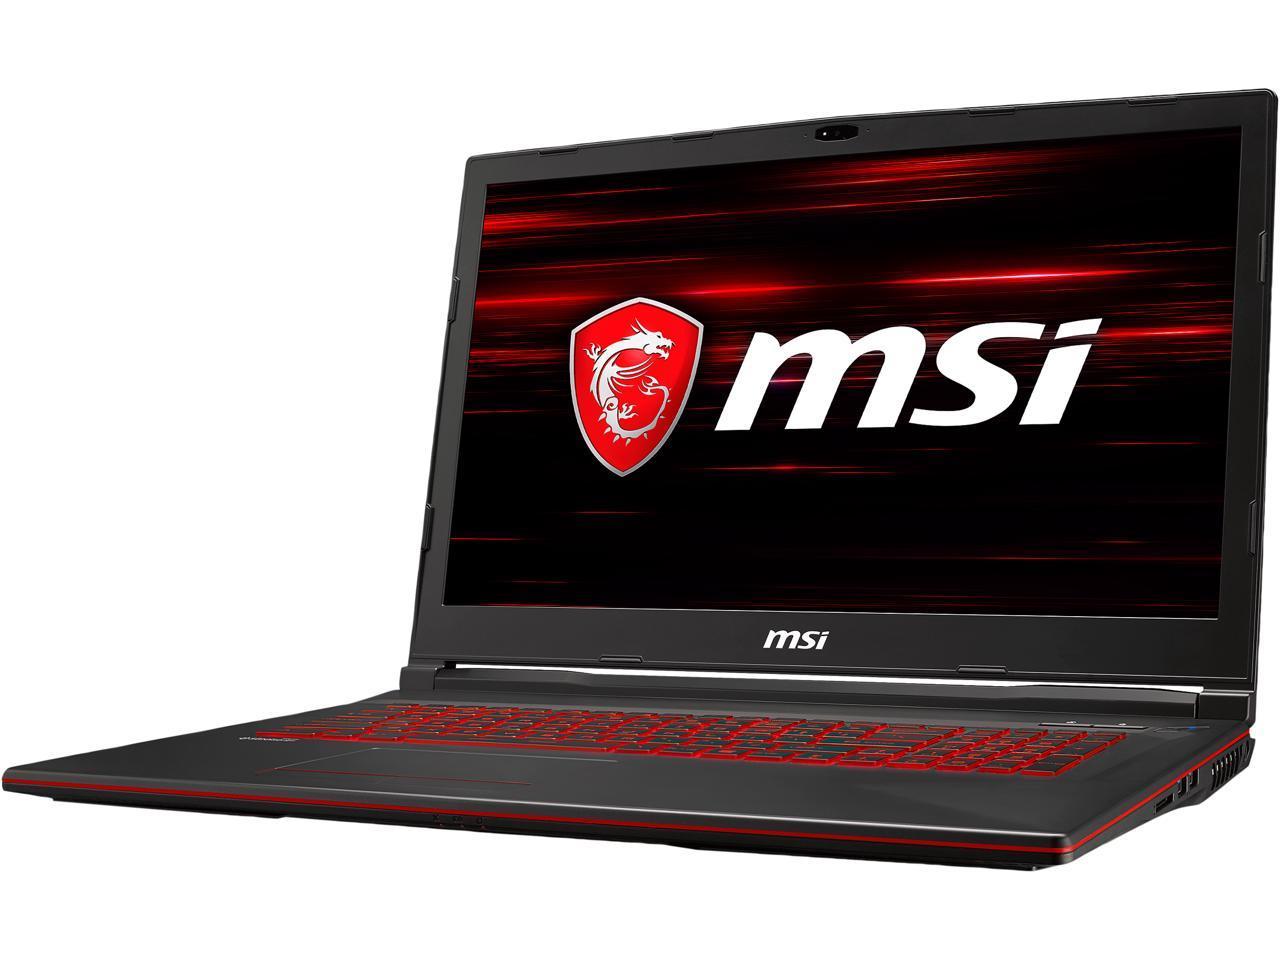 MSI GL Series GL73 9RCX-030 17.3″ 60 Hz Gaming Laptop with 9th Gen Core i5, 8GB RAM, 256GB SSD